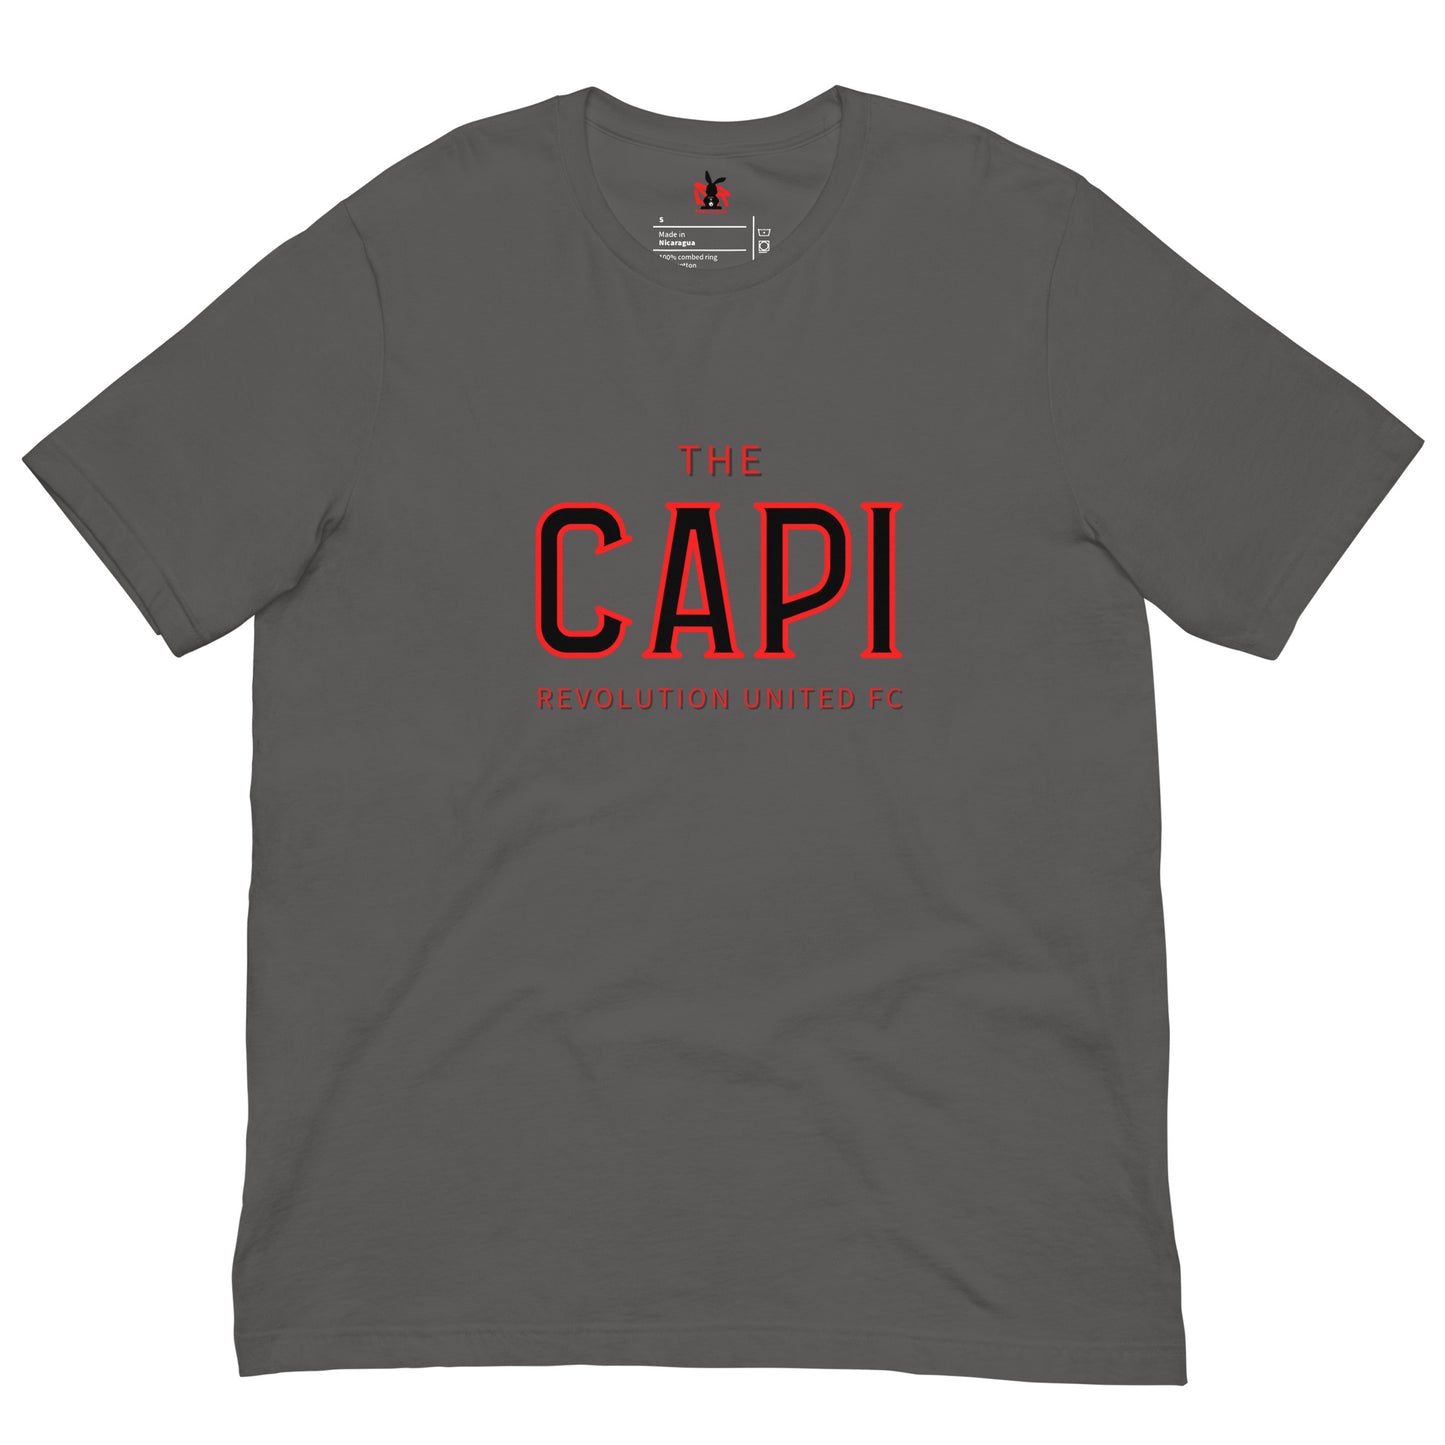 The Capi t-shirt